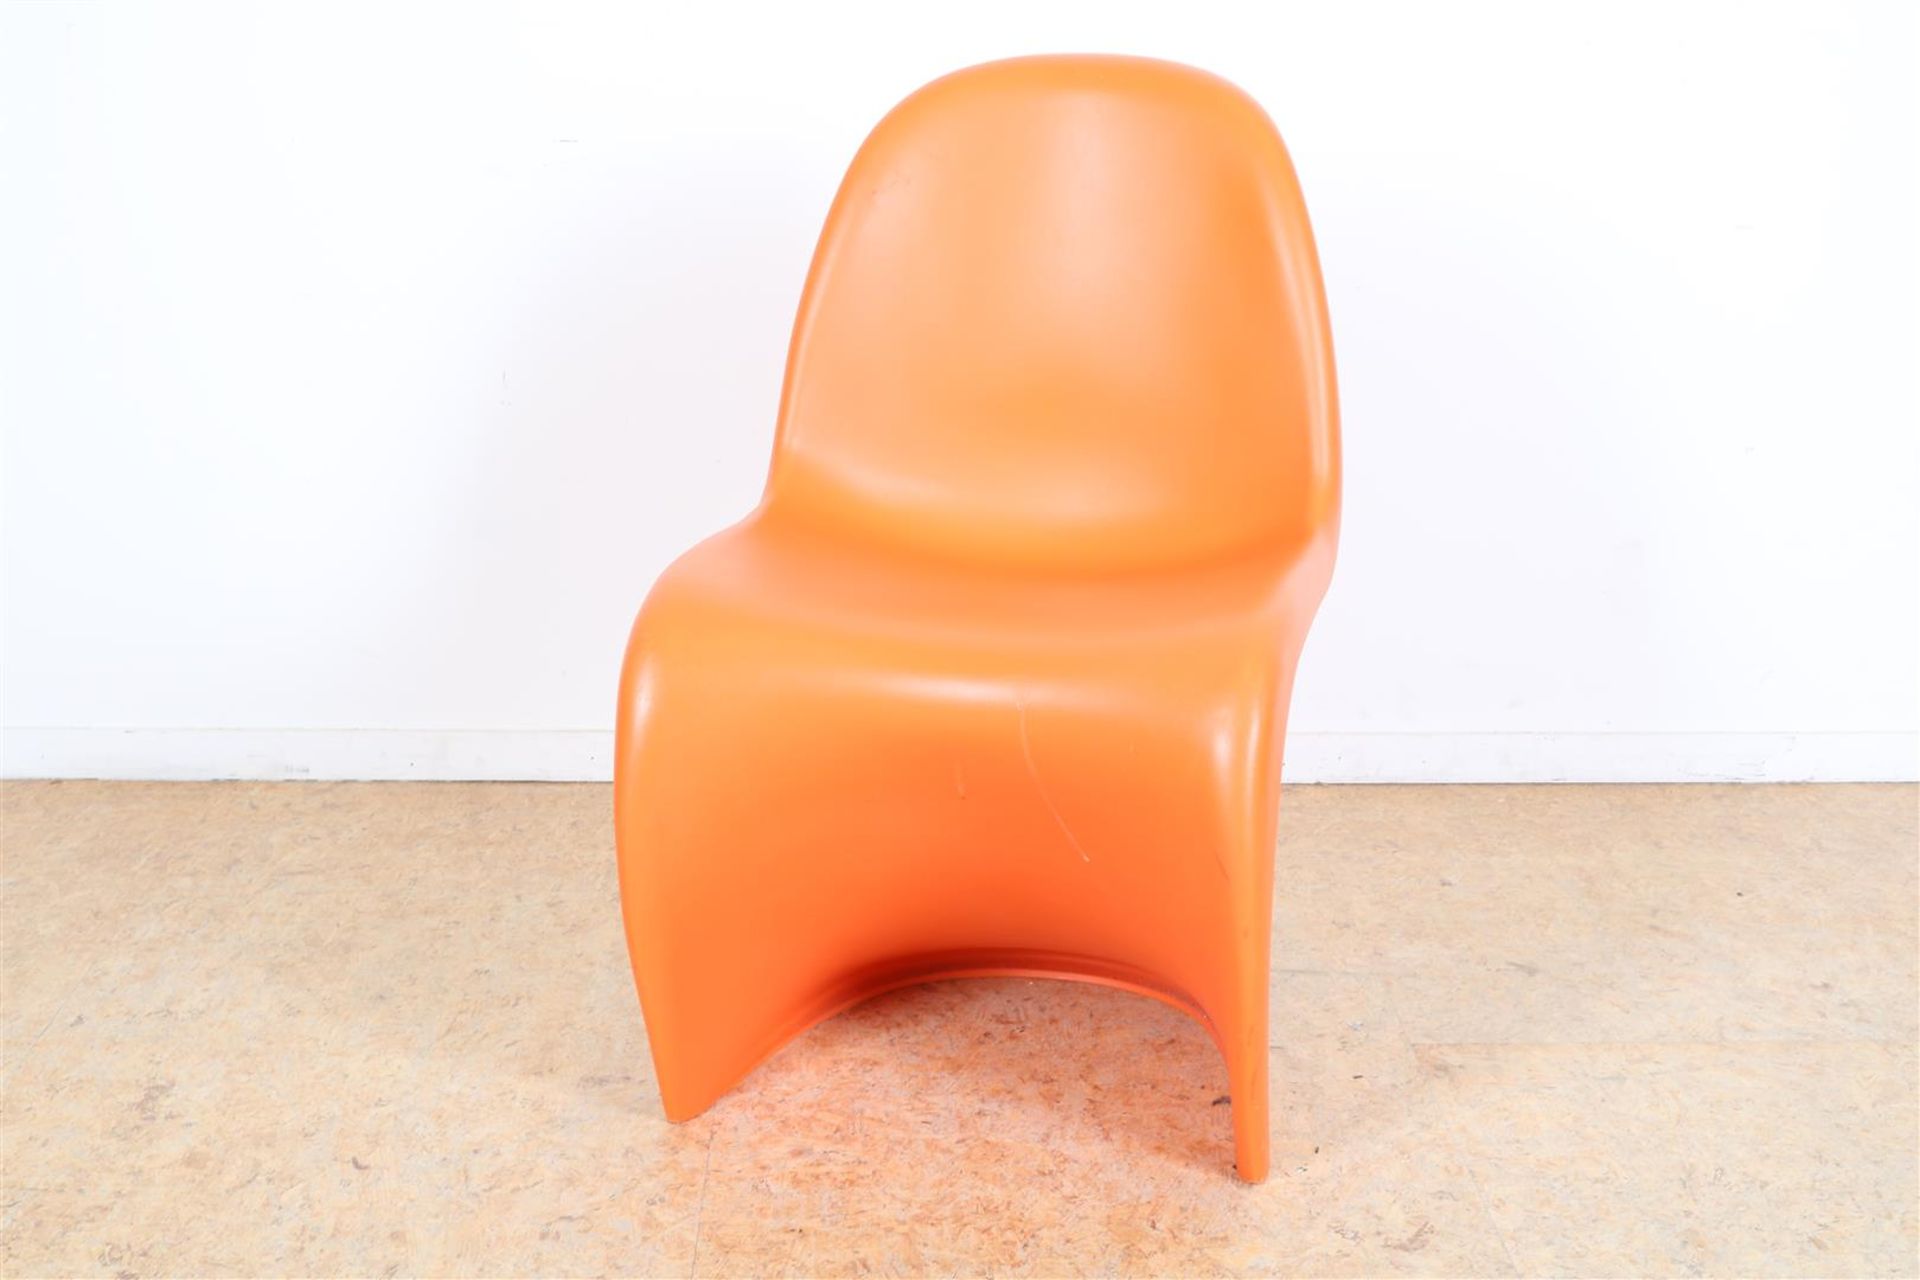 Orange plastic design chair, model: Panton Chair, designer: Verner Panton, for: Vitra, marked with